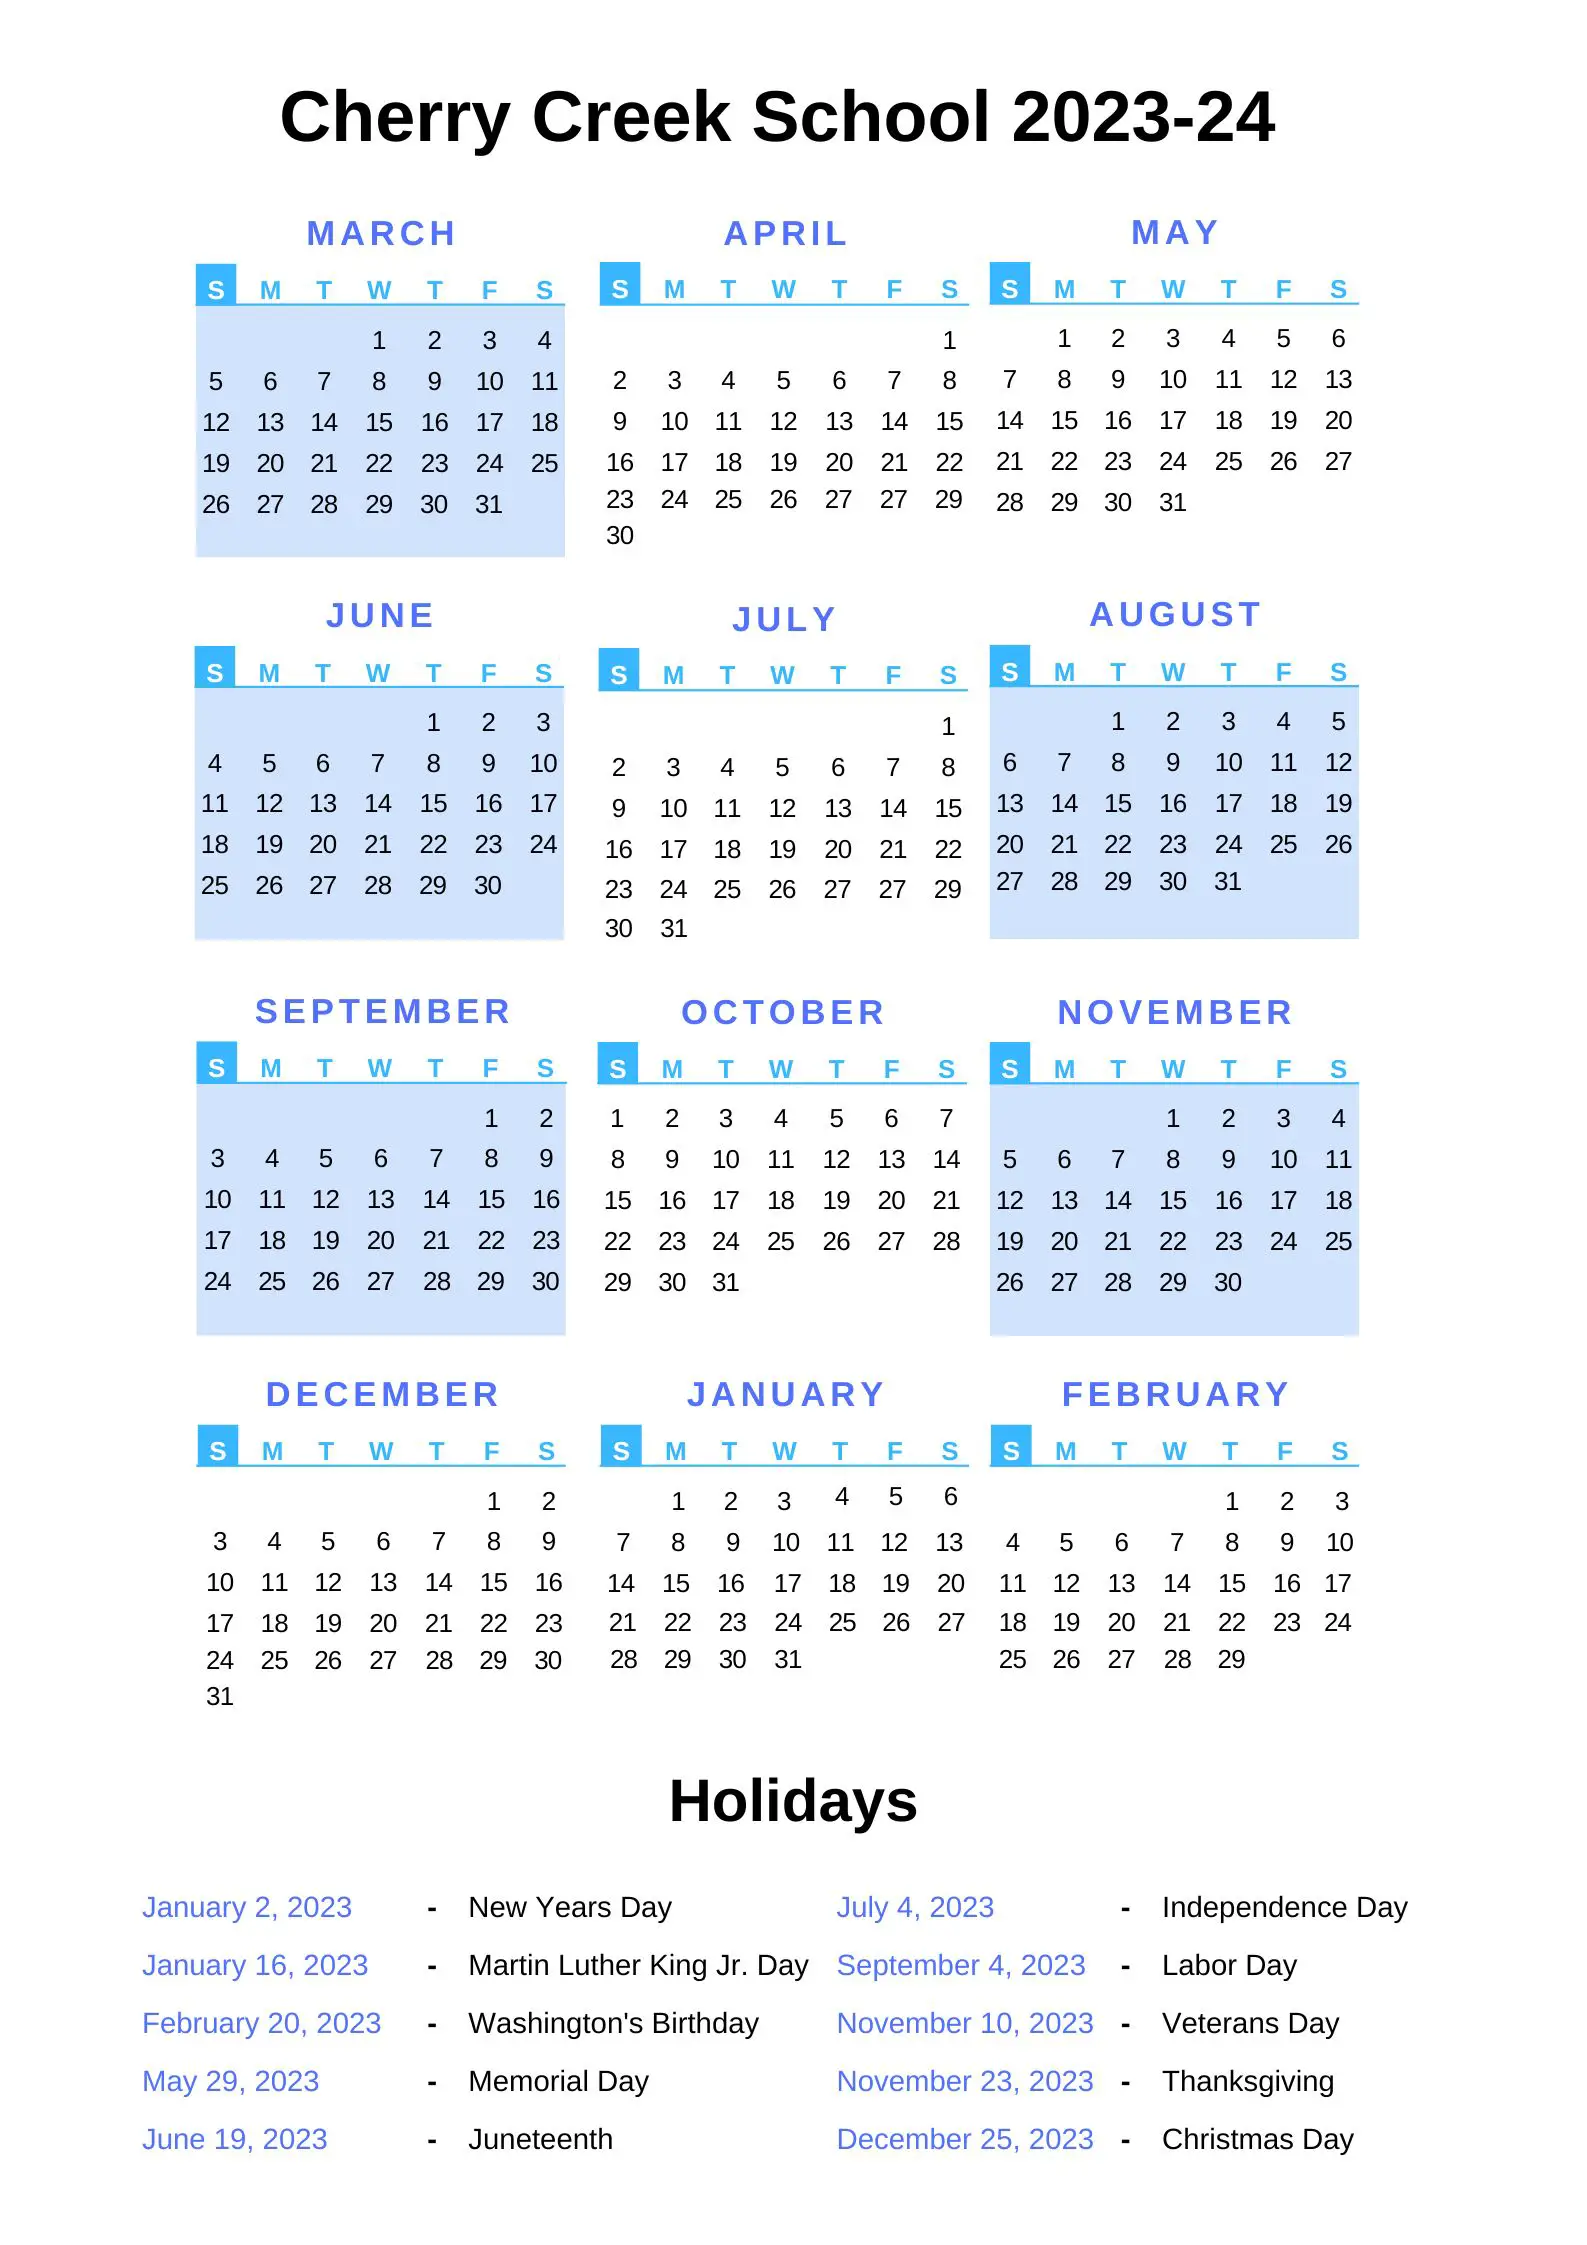 cherry-creek-schools-calendar-ccs-2023-24-with-holidays